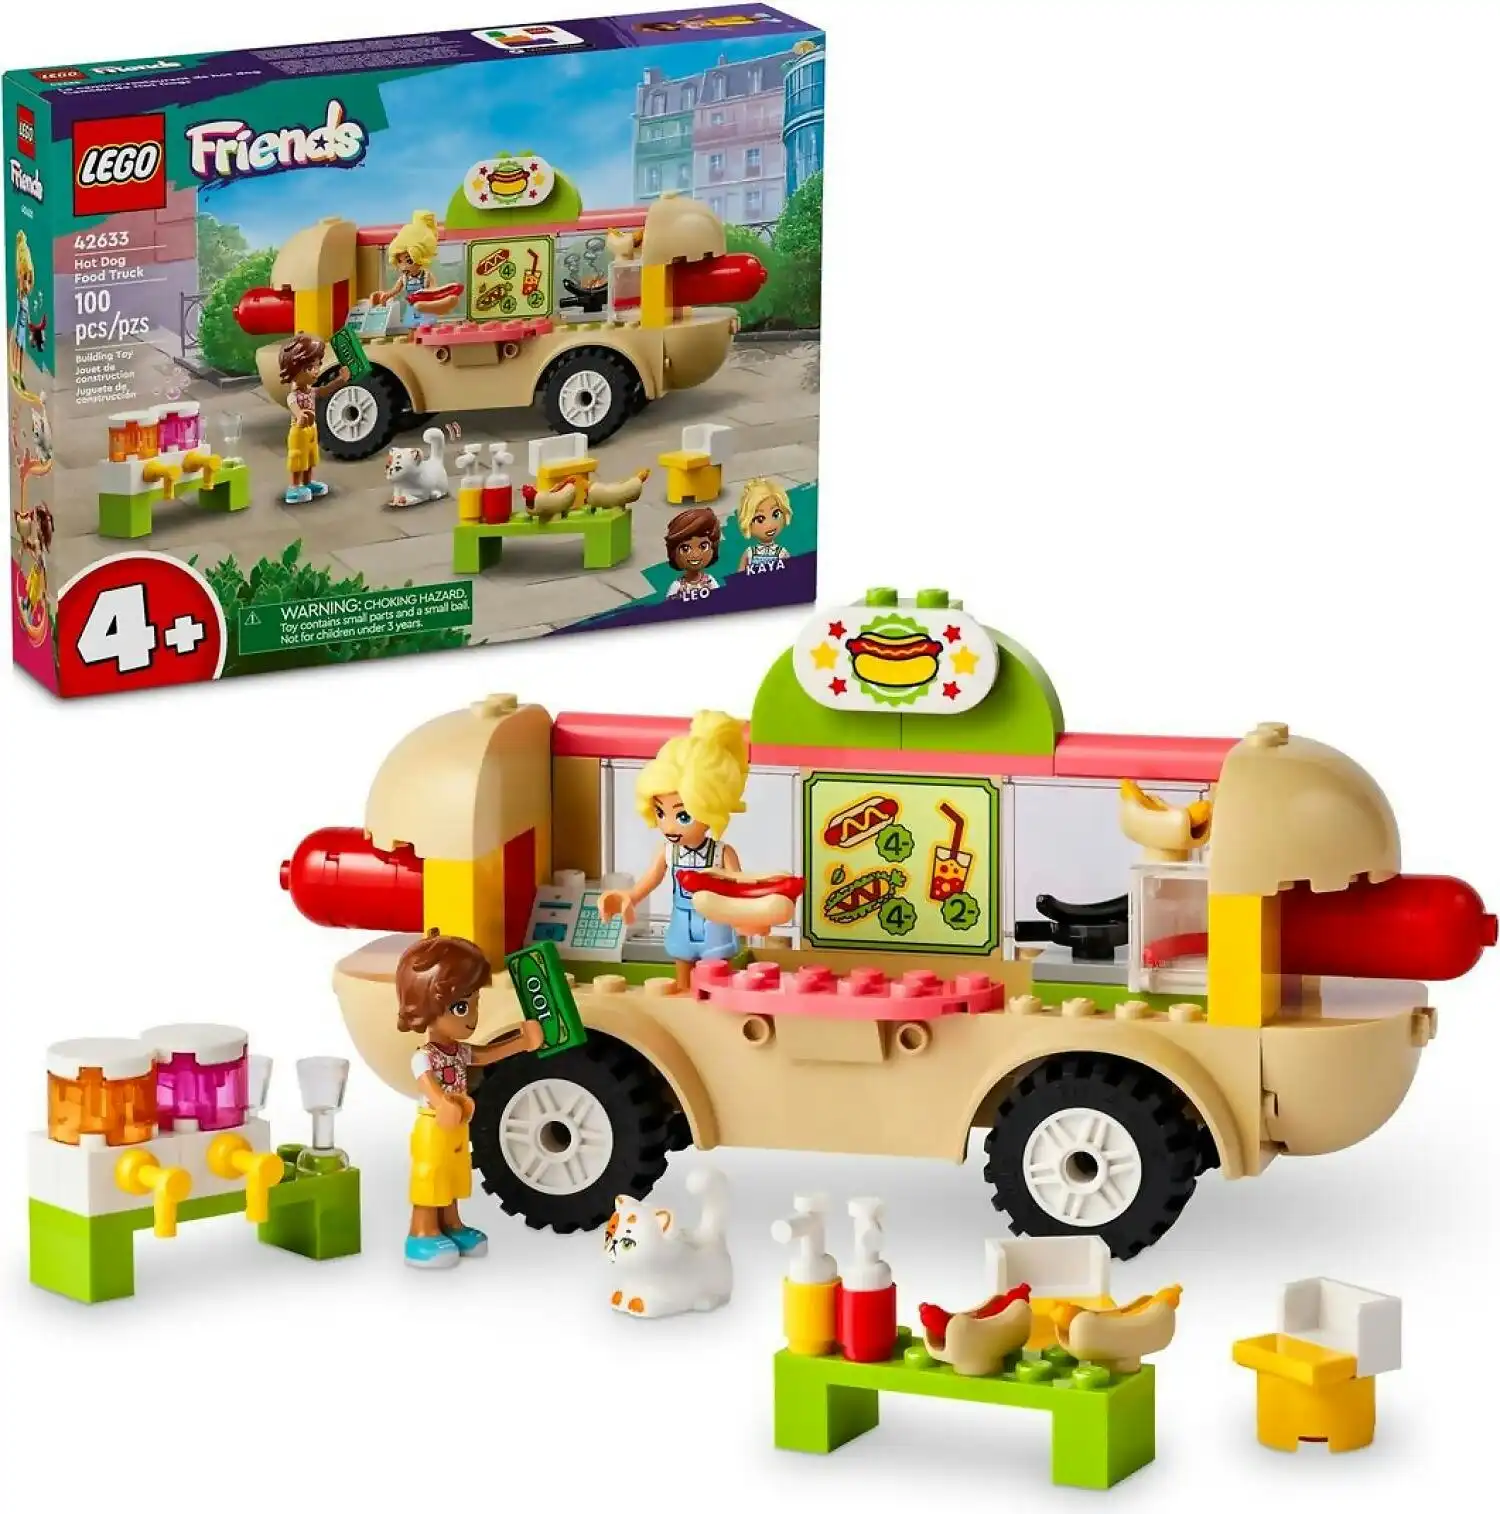 LEGO 42633 Hot Dog Food Truck - Friends 4+